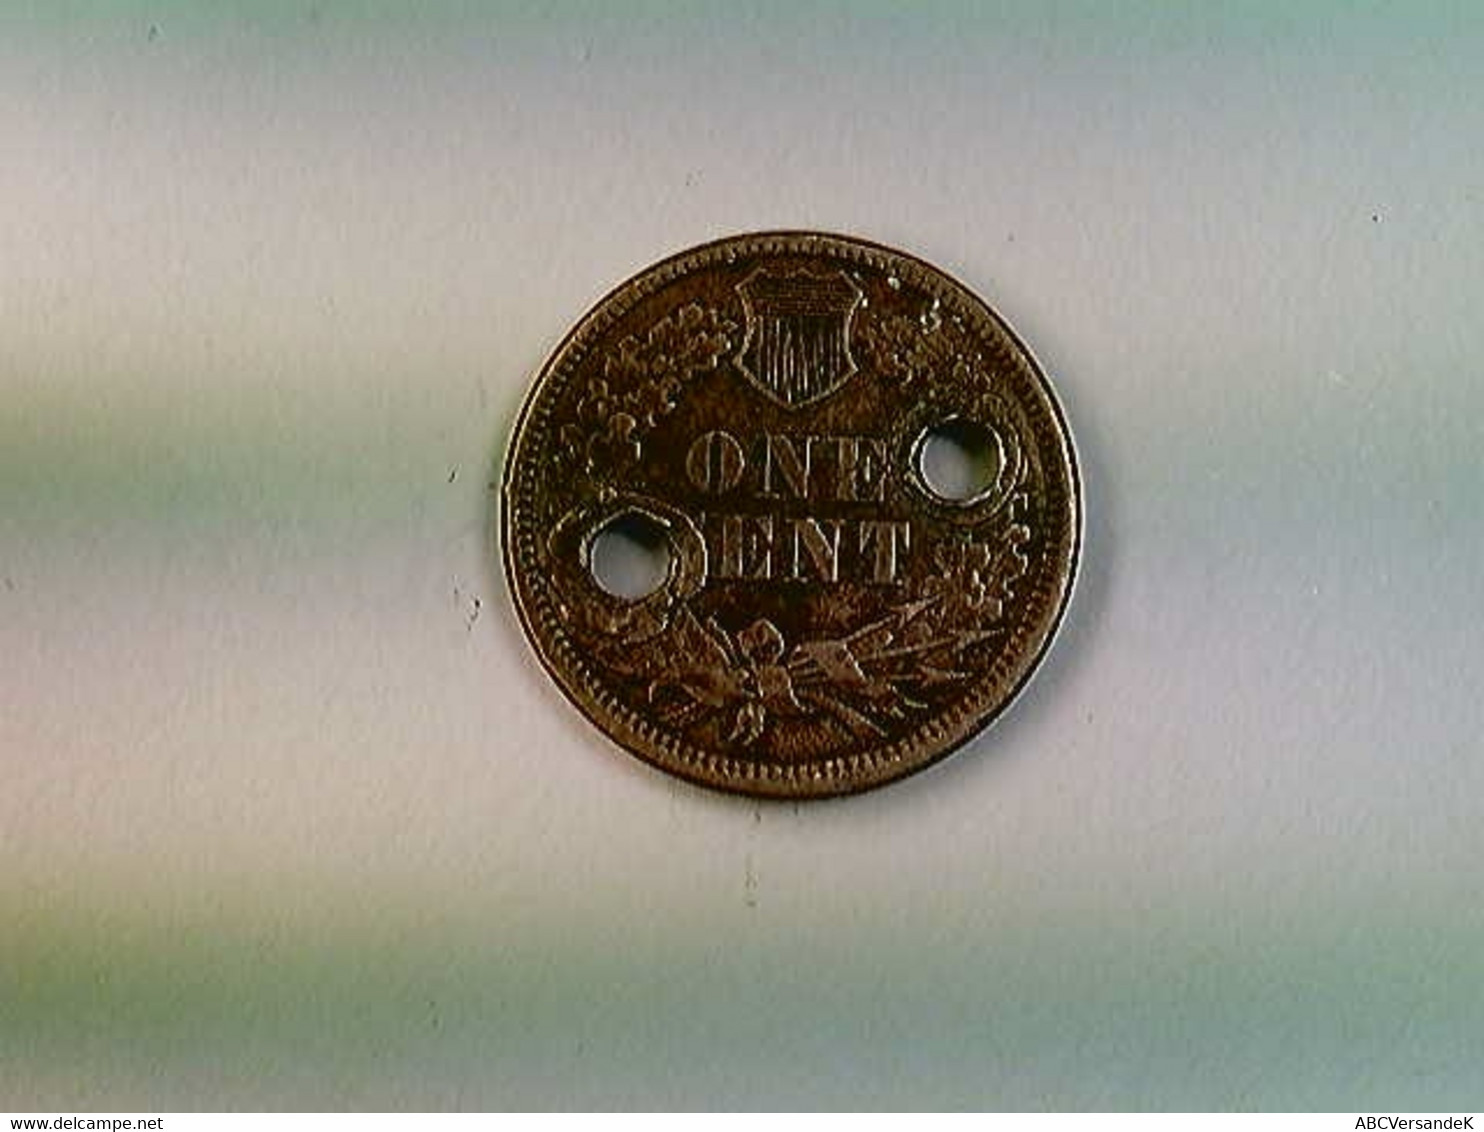 Münze, One Cent, 1860, United States Of America, Indianerkopf - Numismatiek